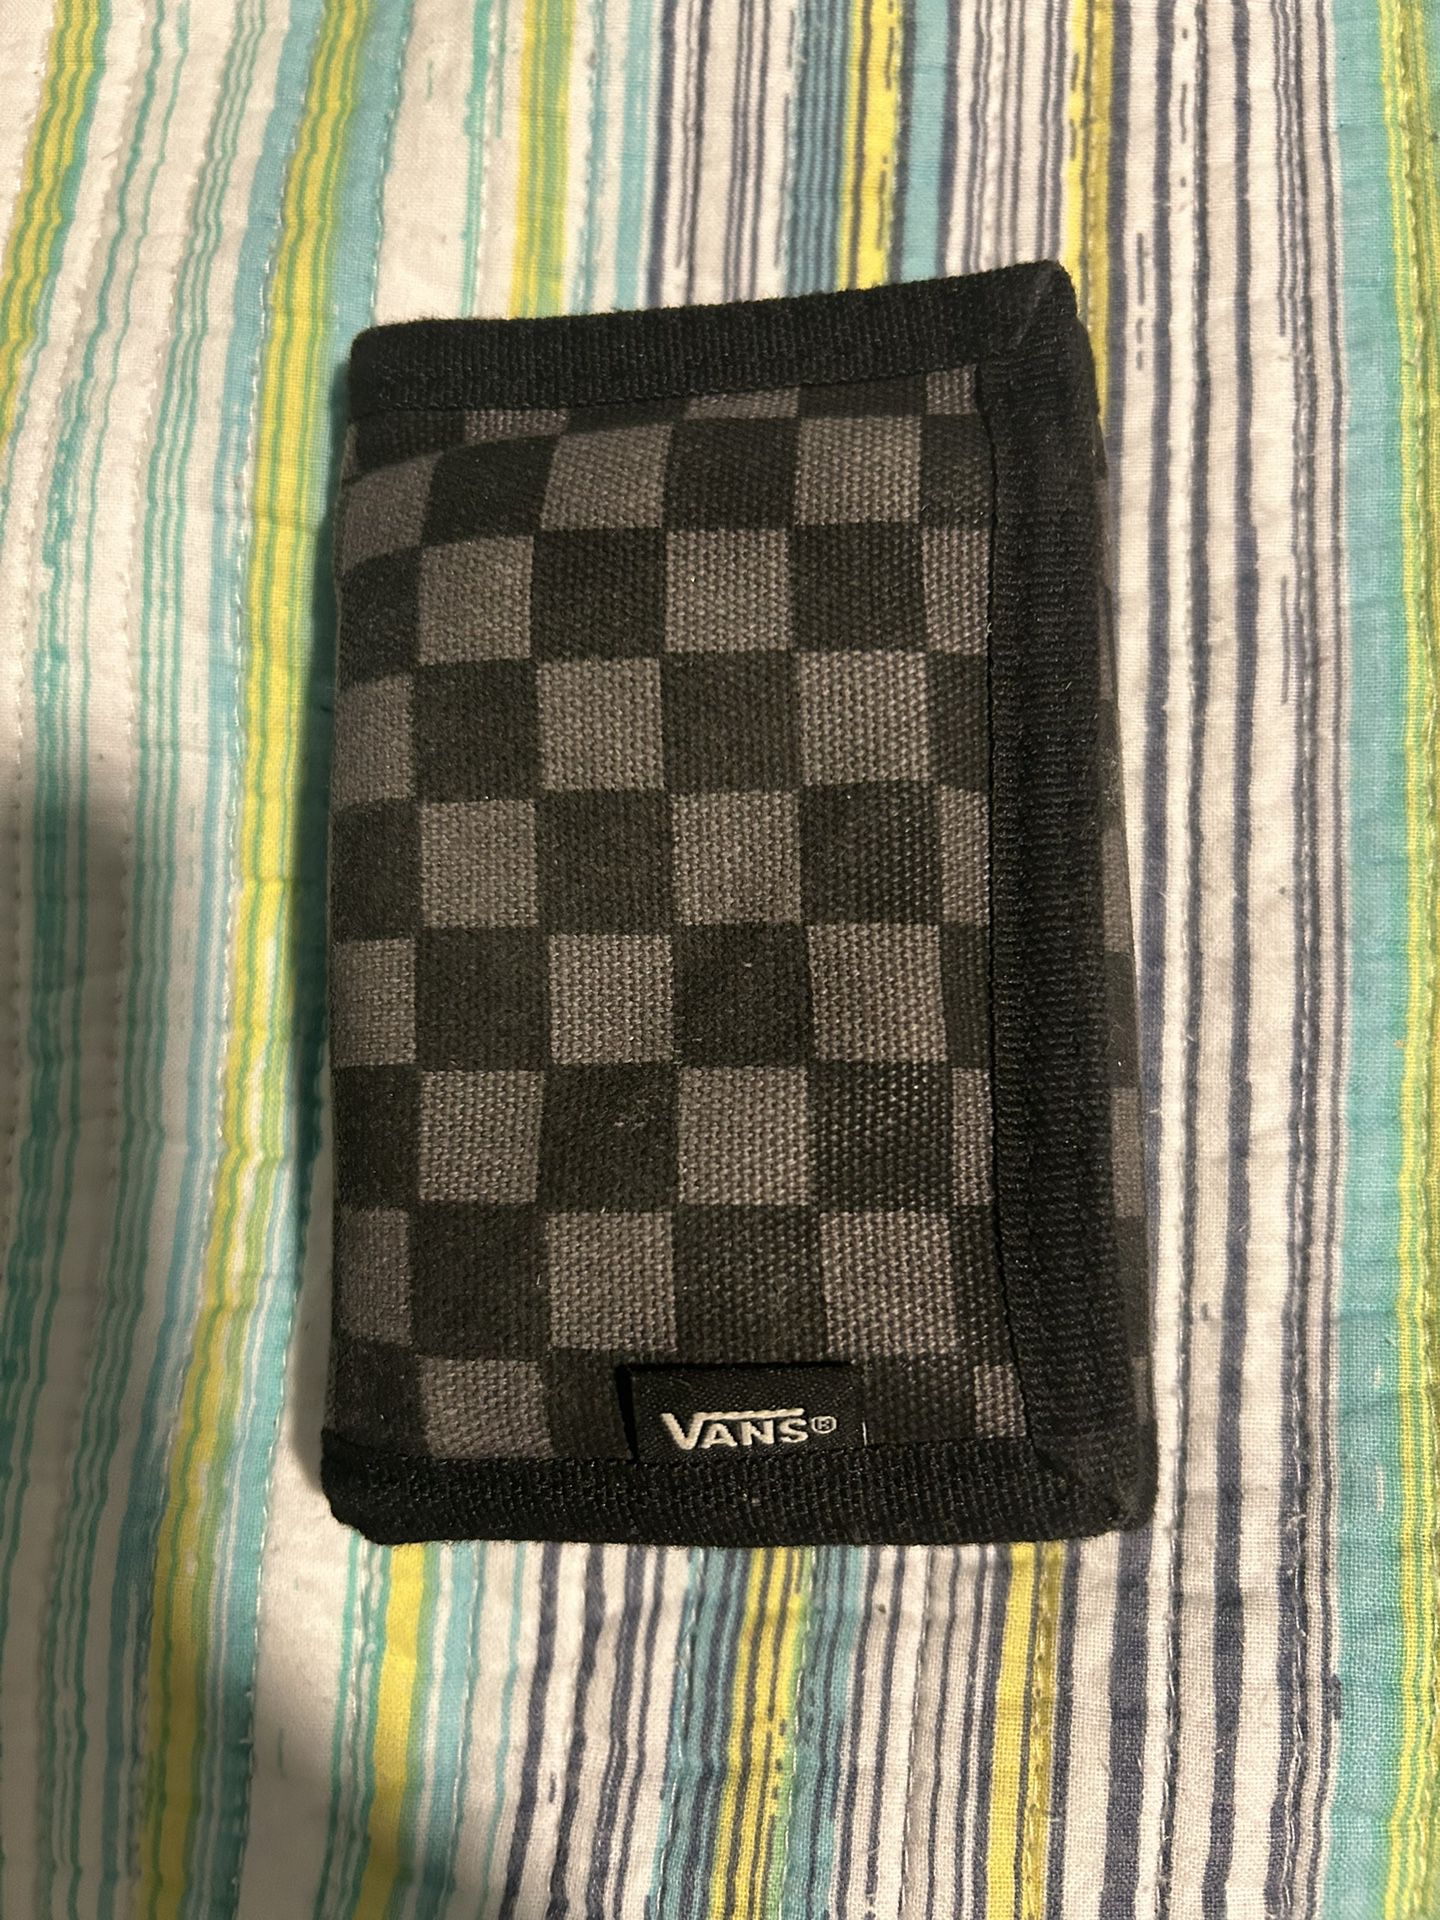 Vans checkered wallet